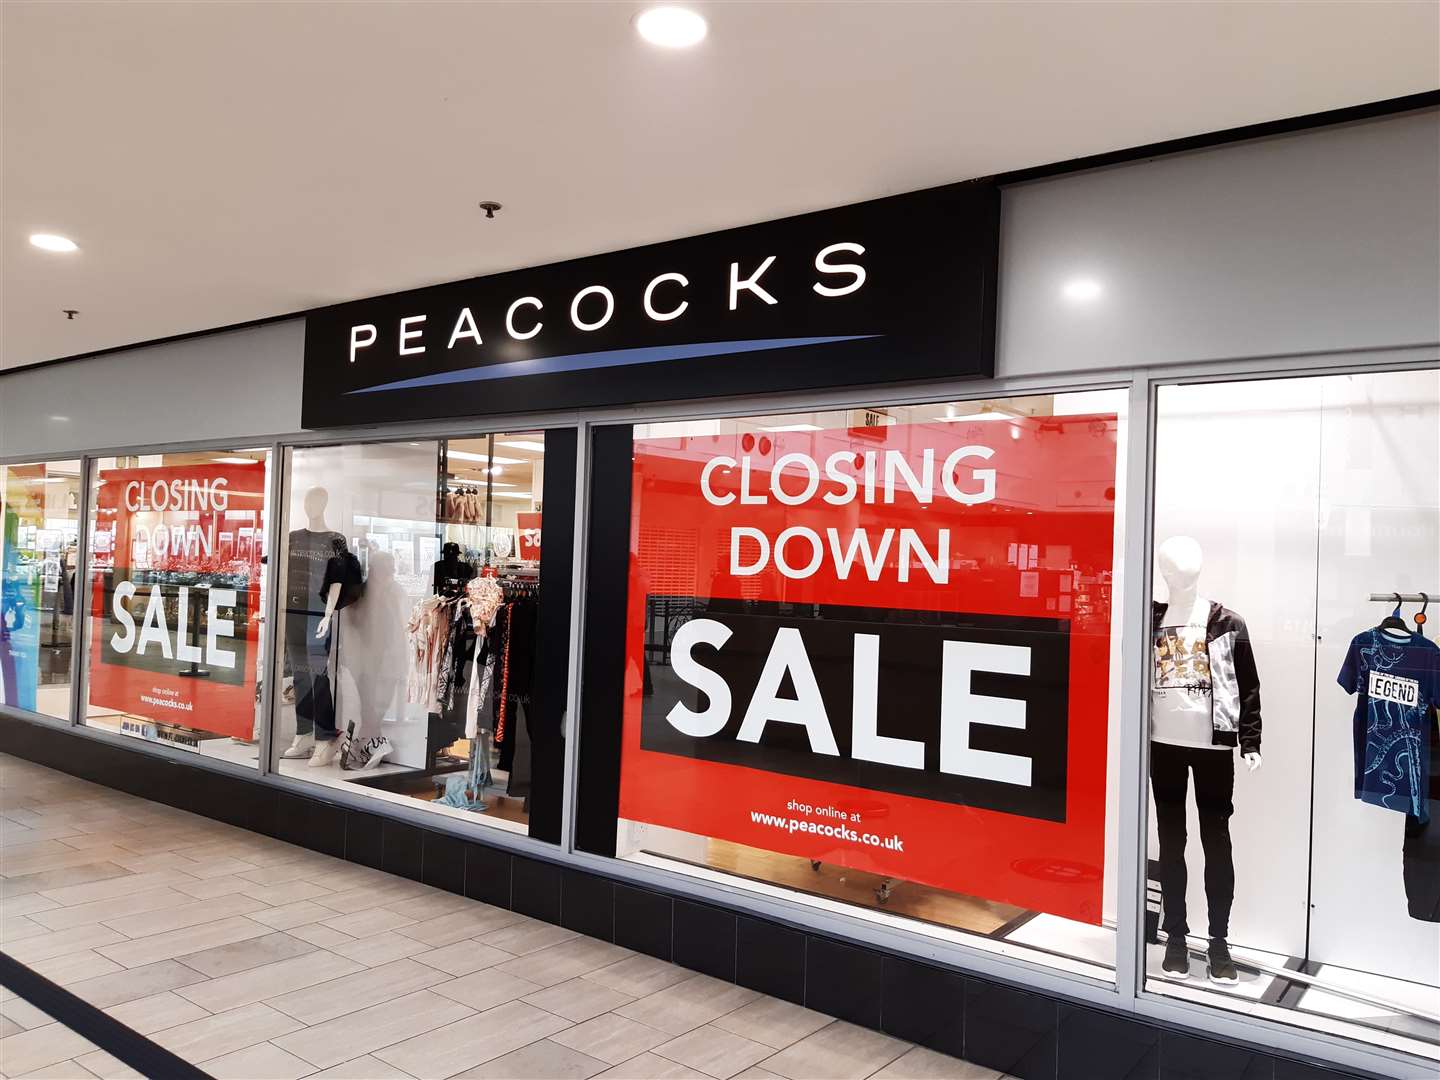 The Peacocks store is seemingly on its last legs